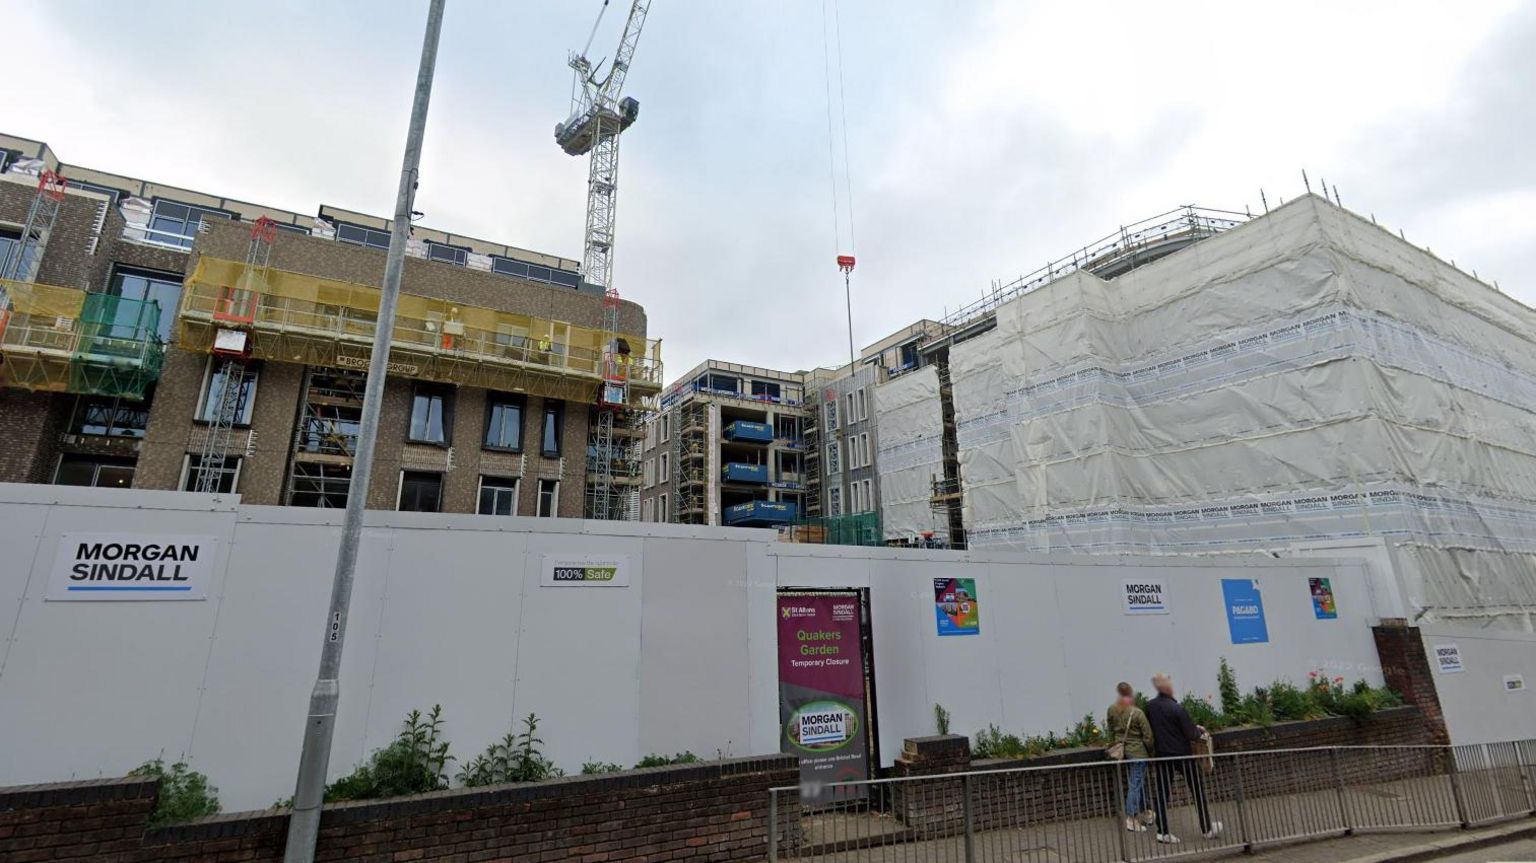 Jubilee Square construction site, St Albans